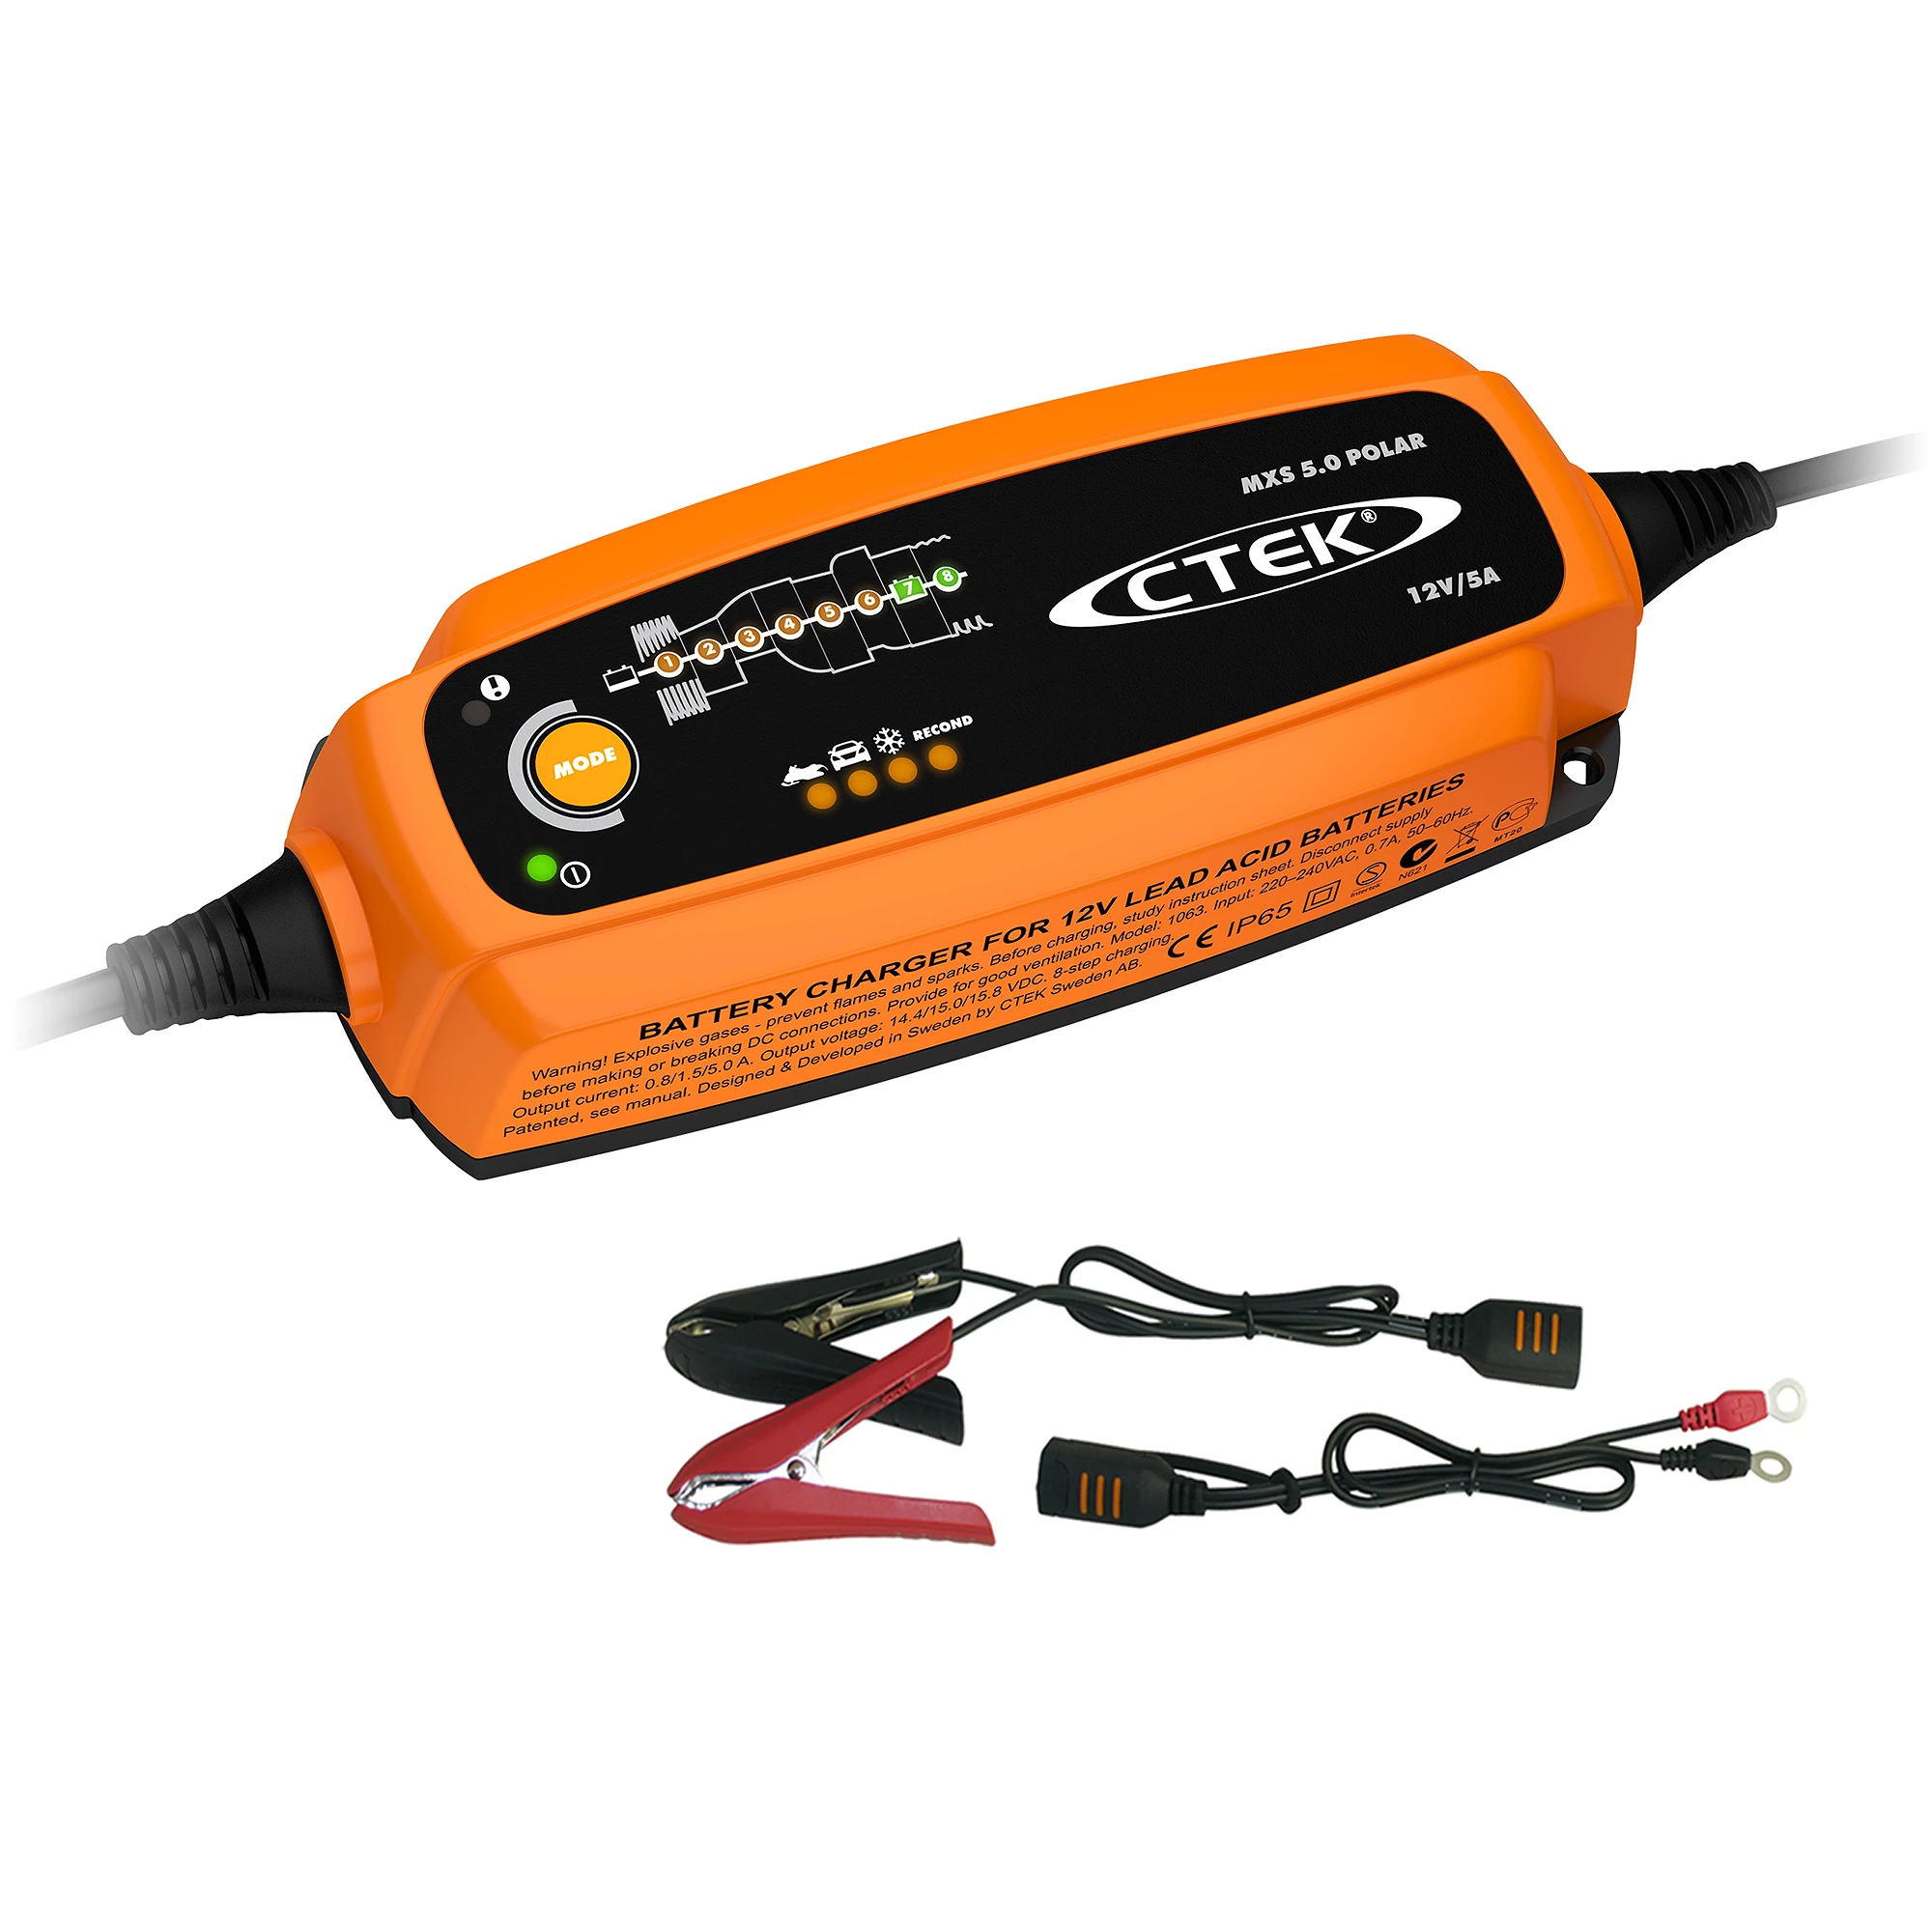 CTEK 5.0 POLAR, Batterieladegerät 12V Für Extreme Kälte,  Erhaltungsladegerät, Intelligentes Ladegerät Auto Und Motorschlitten,  Batteriepfleger Mit